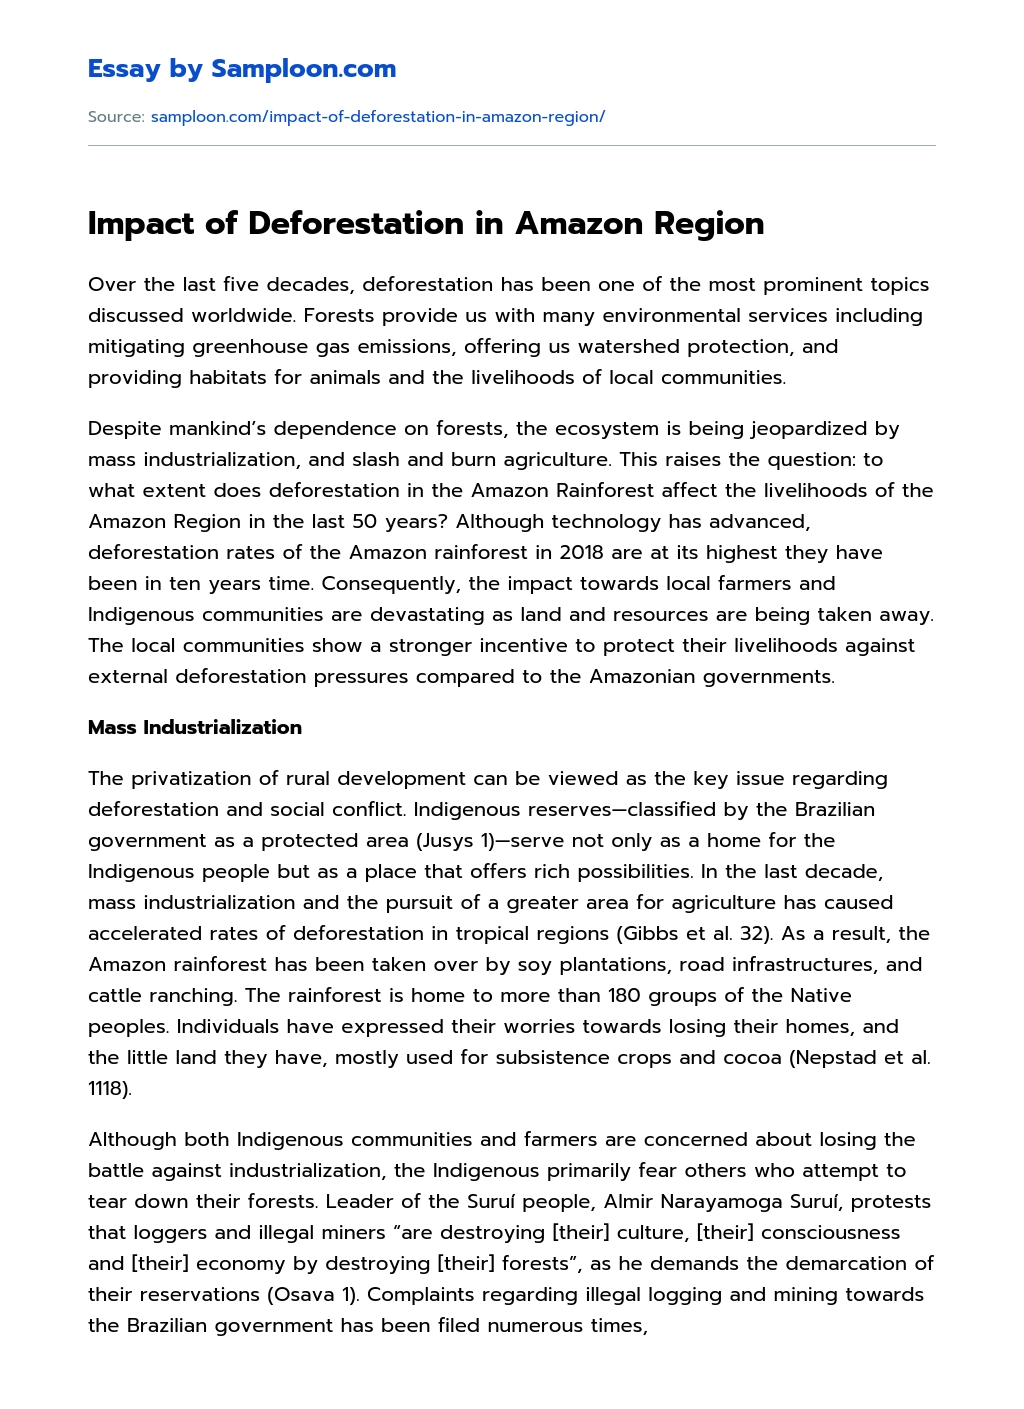 Impact of Deforestation in Amazon Region essay